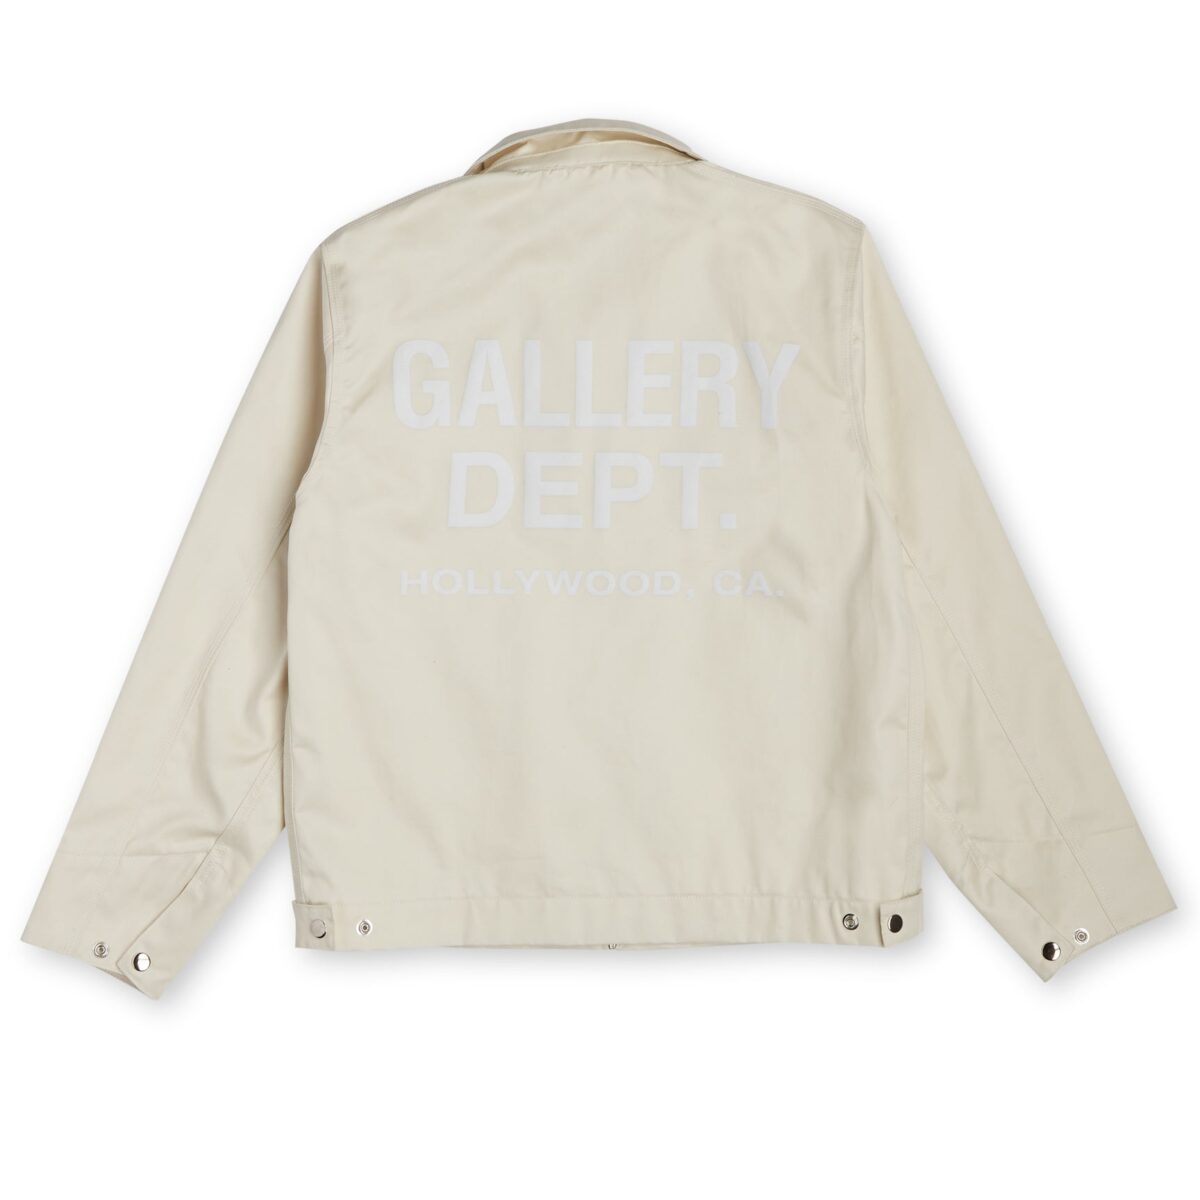 Gallery Dept Montecito Jacket White